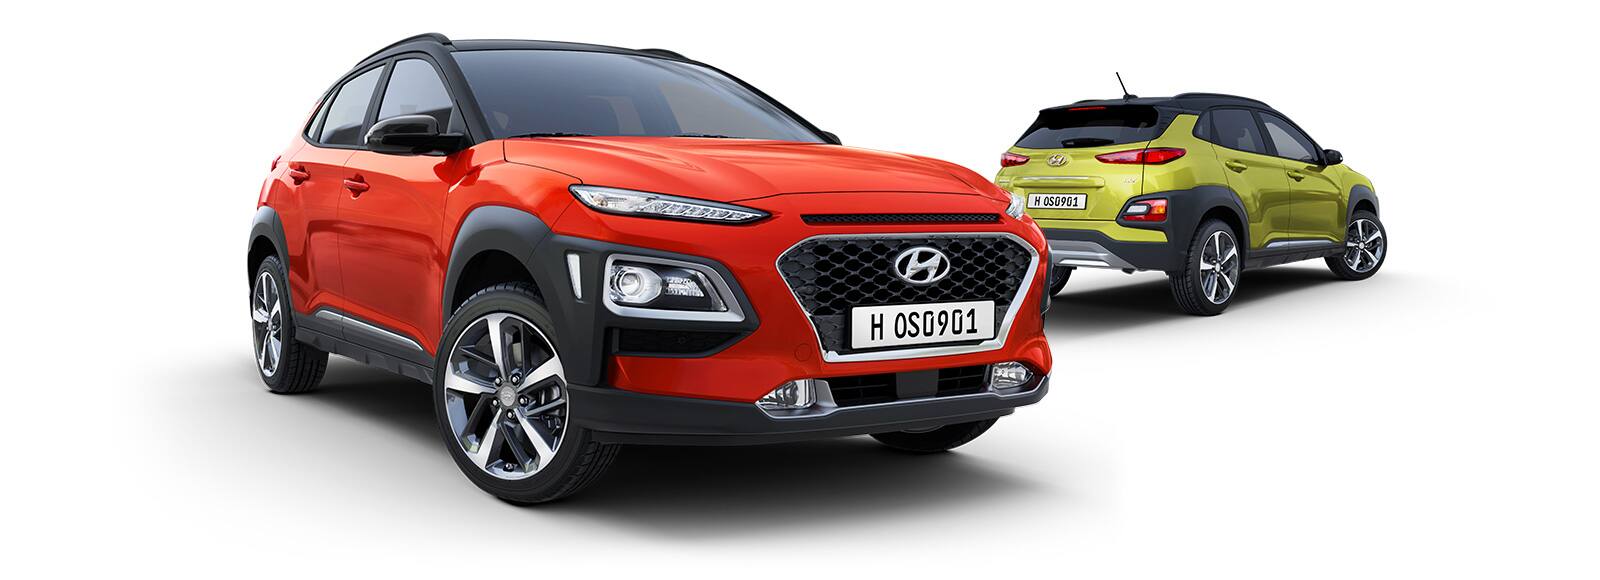 Hyundai Kona electric SUV car India launch confirmed